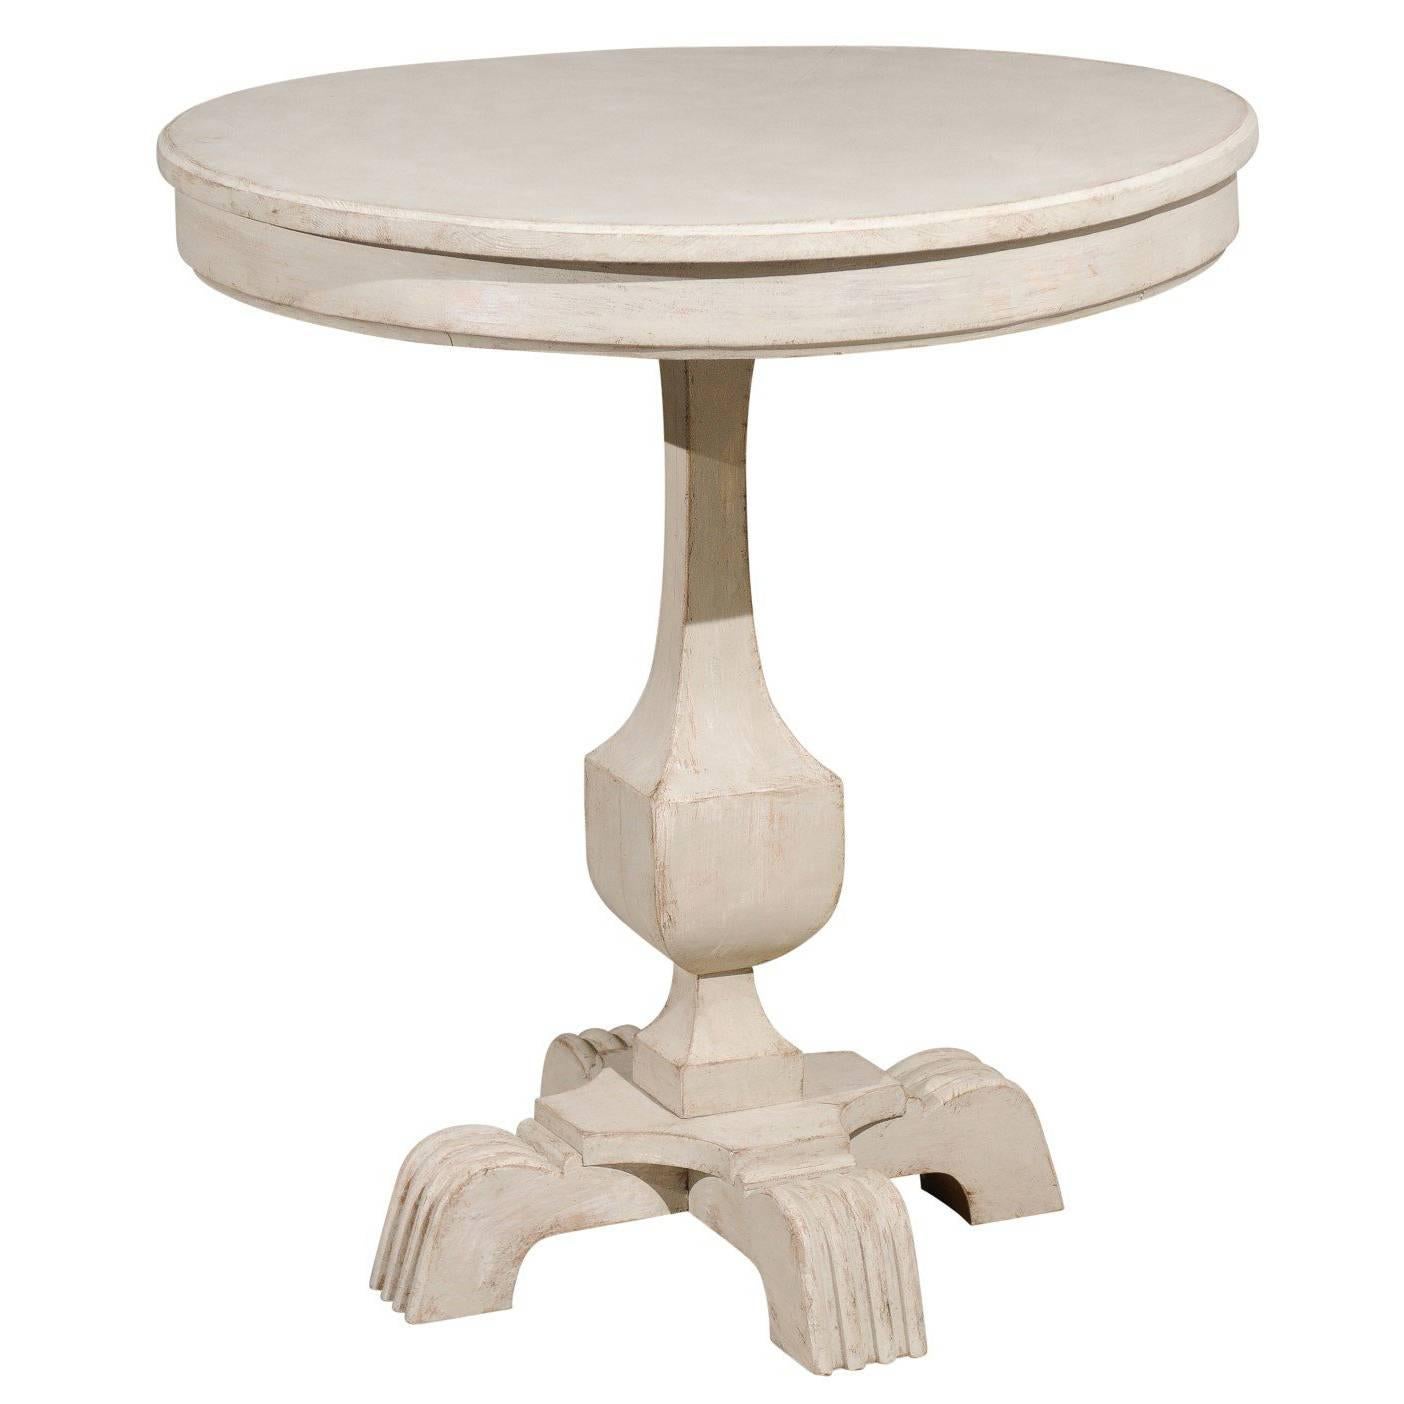 Swedish Cream Painted Wood Guéridon Table with Pedestal Base, circa 1890